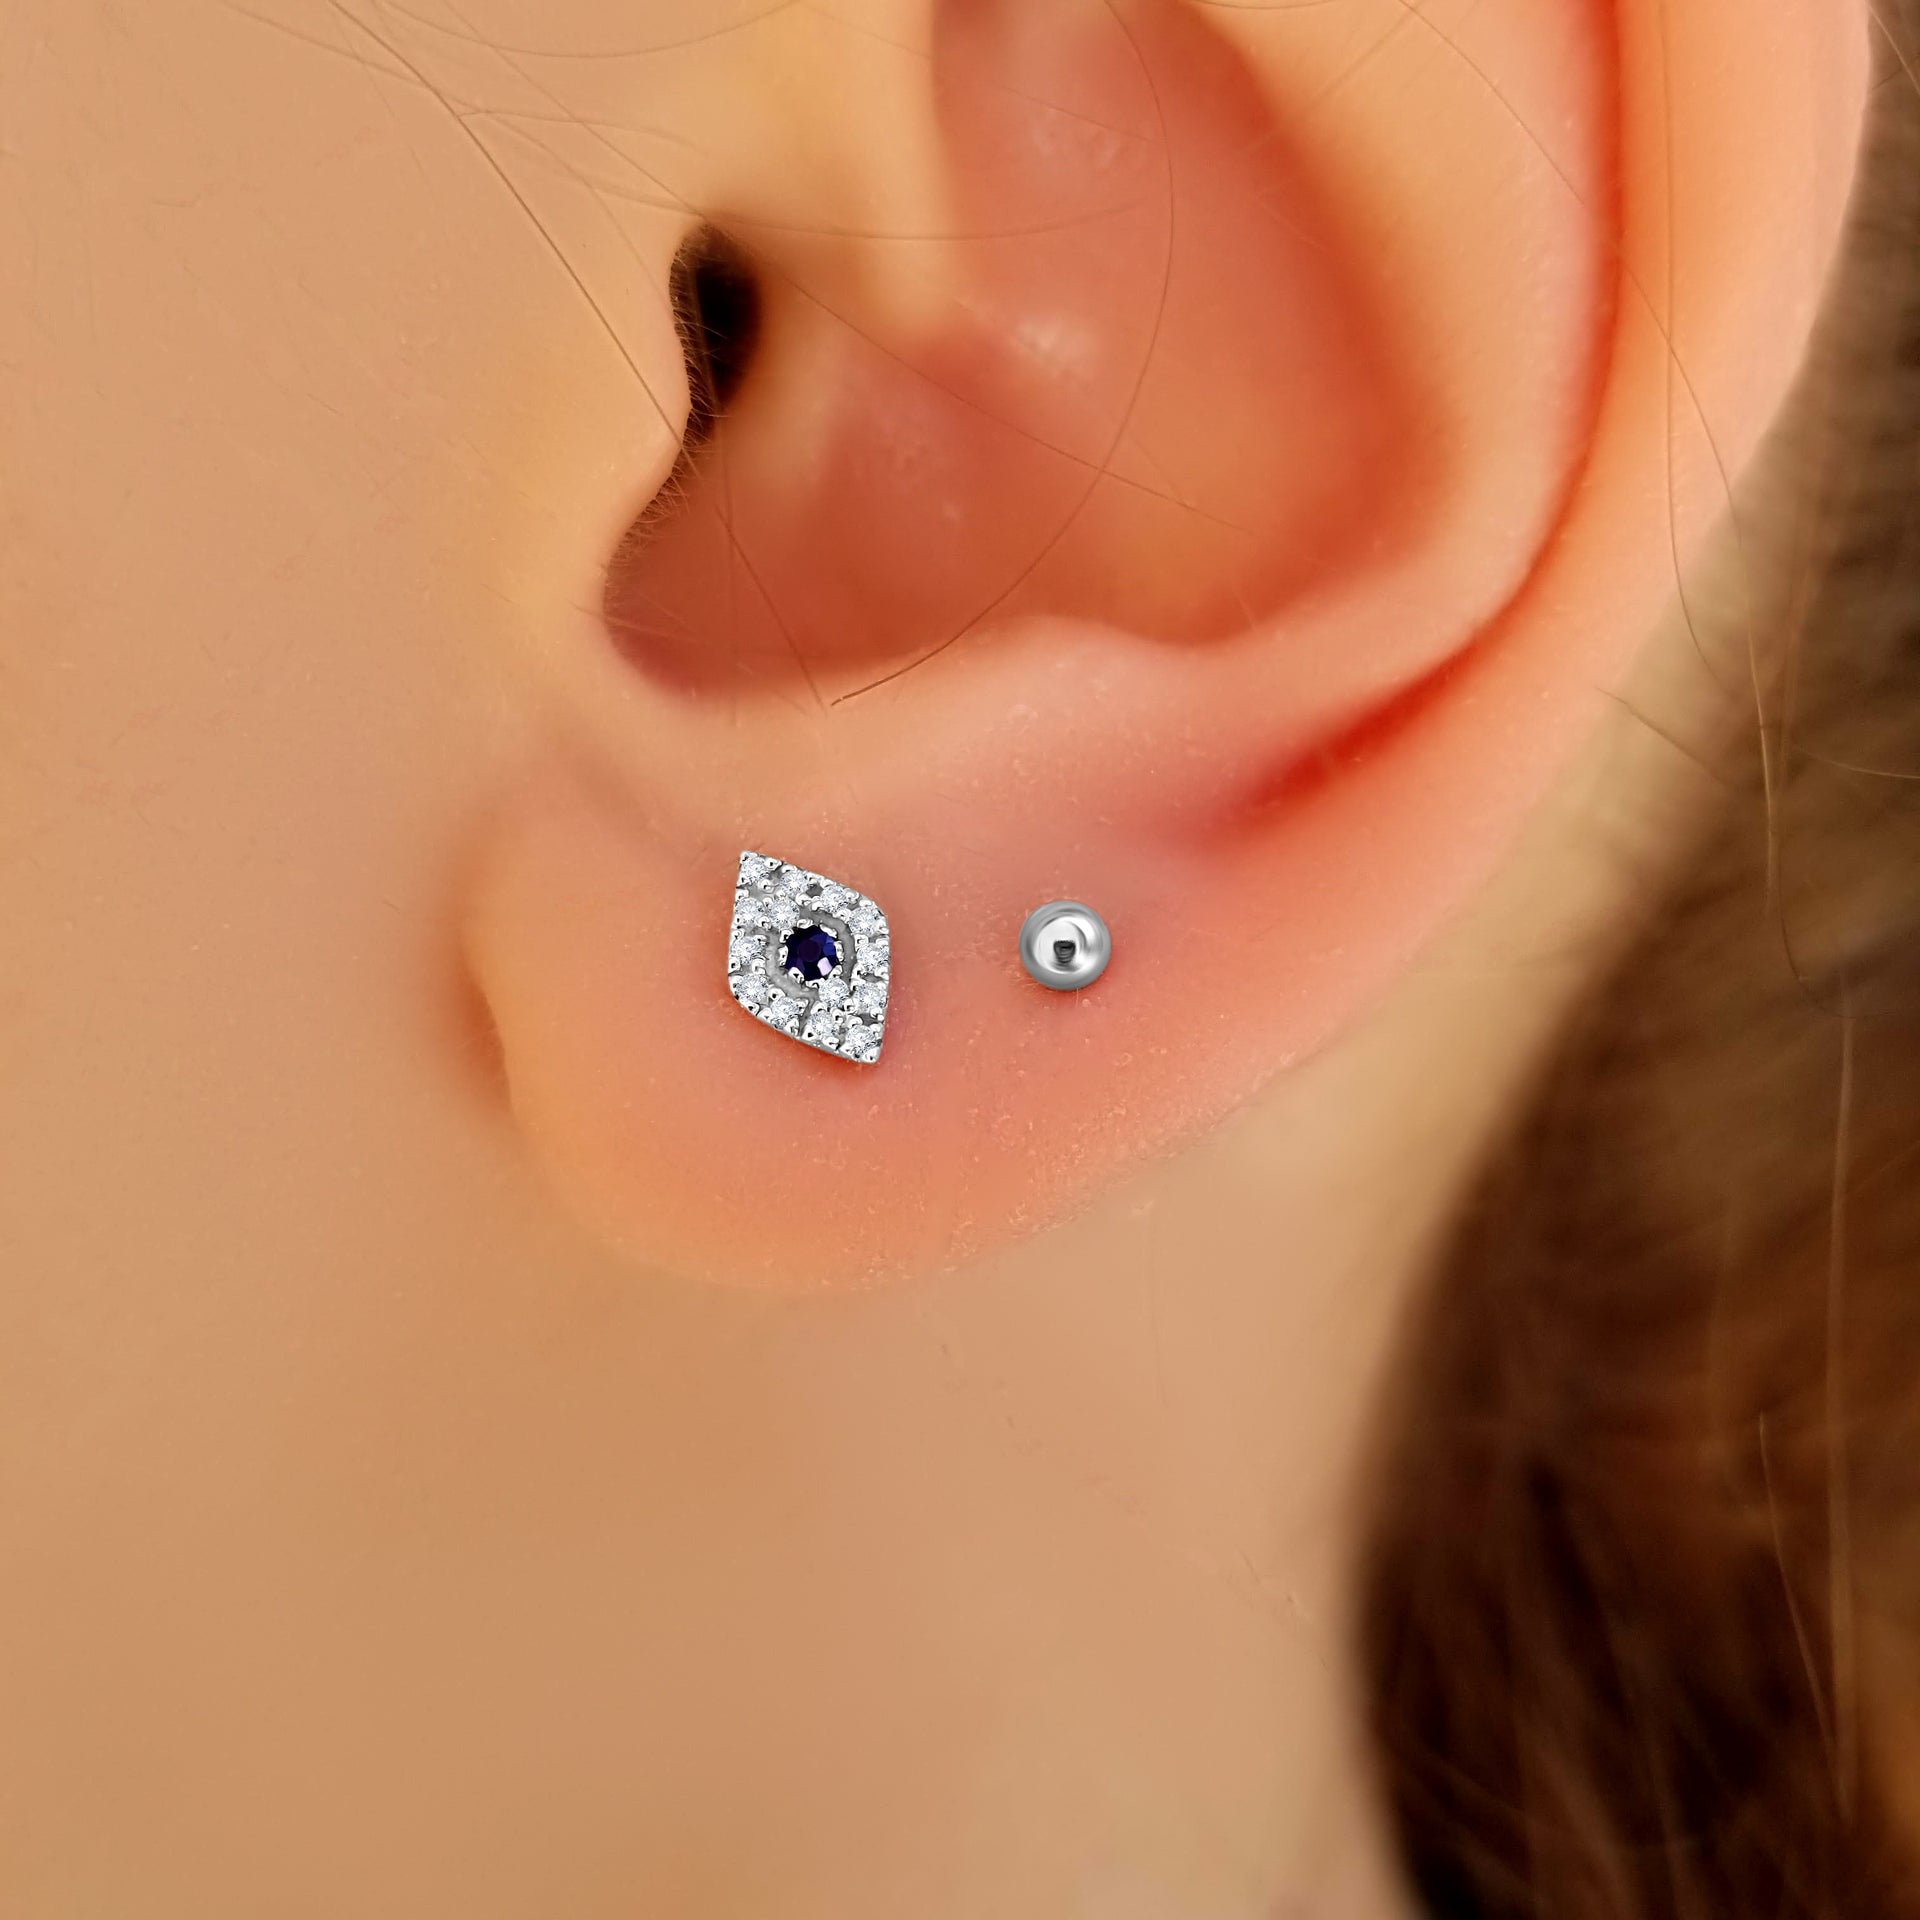 evil eye earrings with diamonds